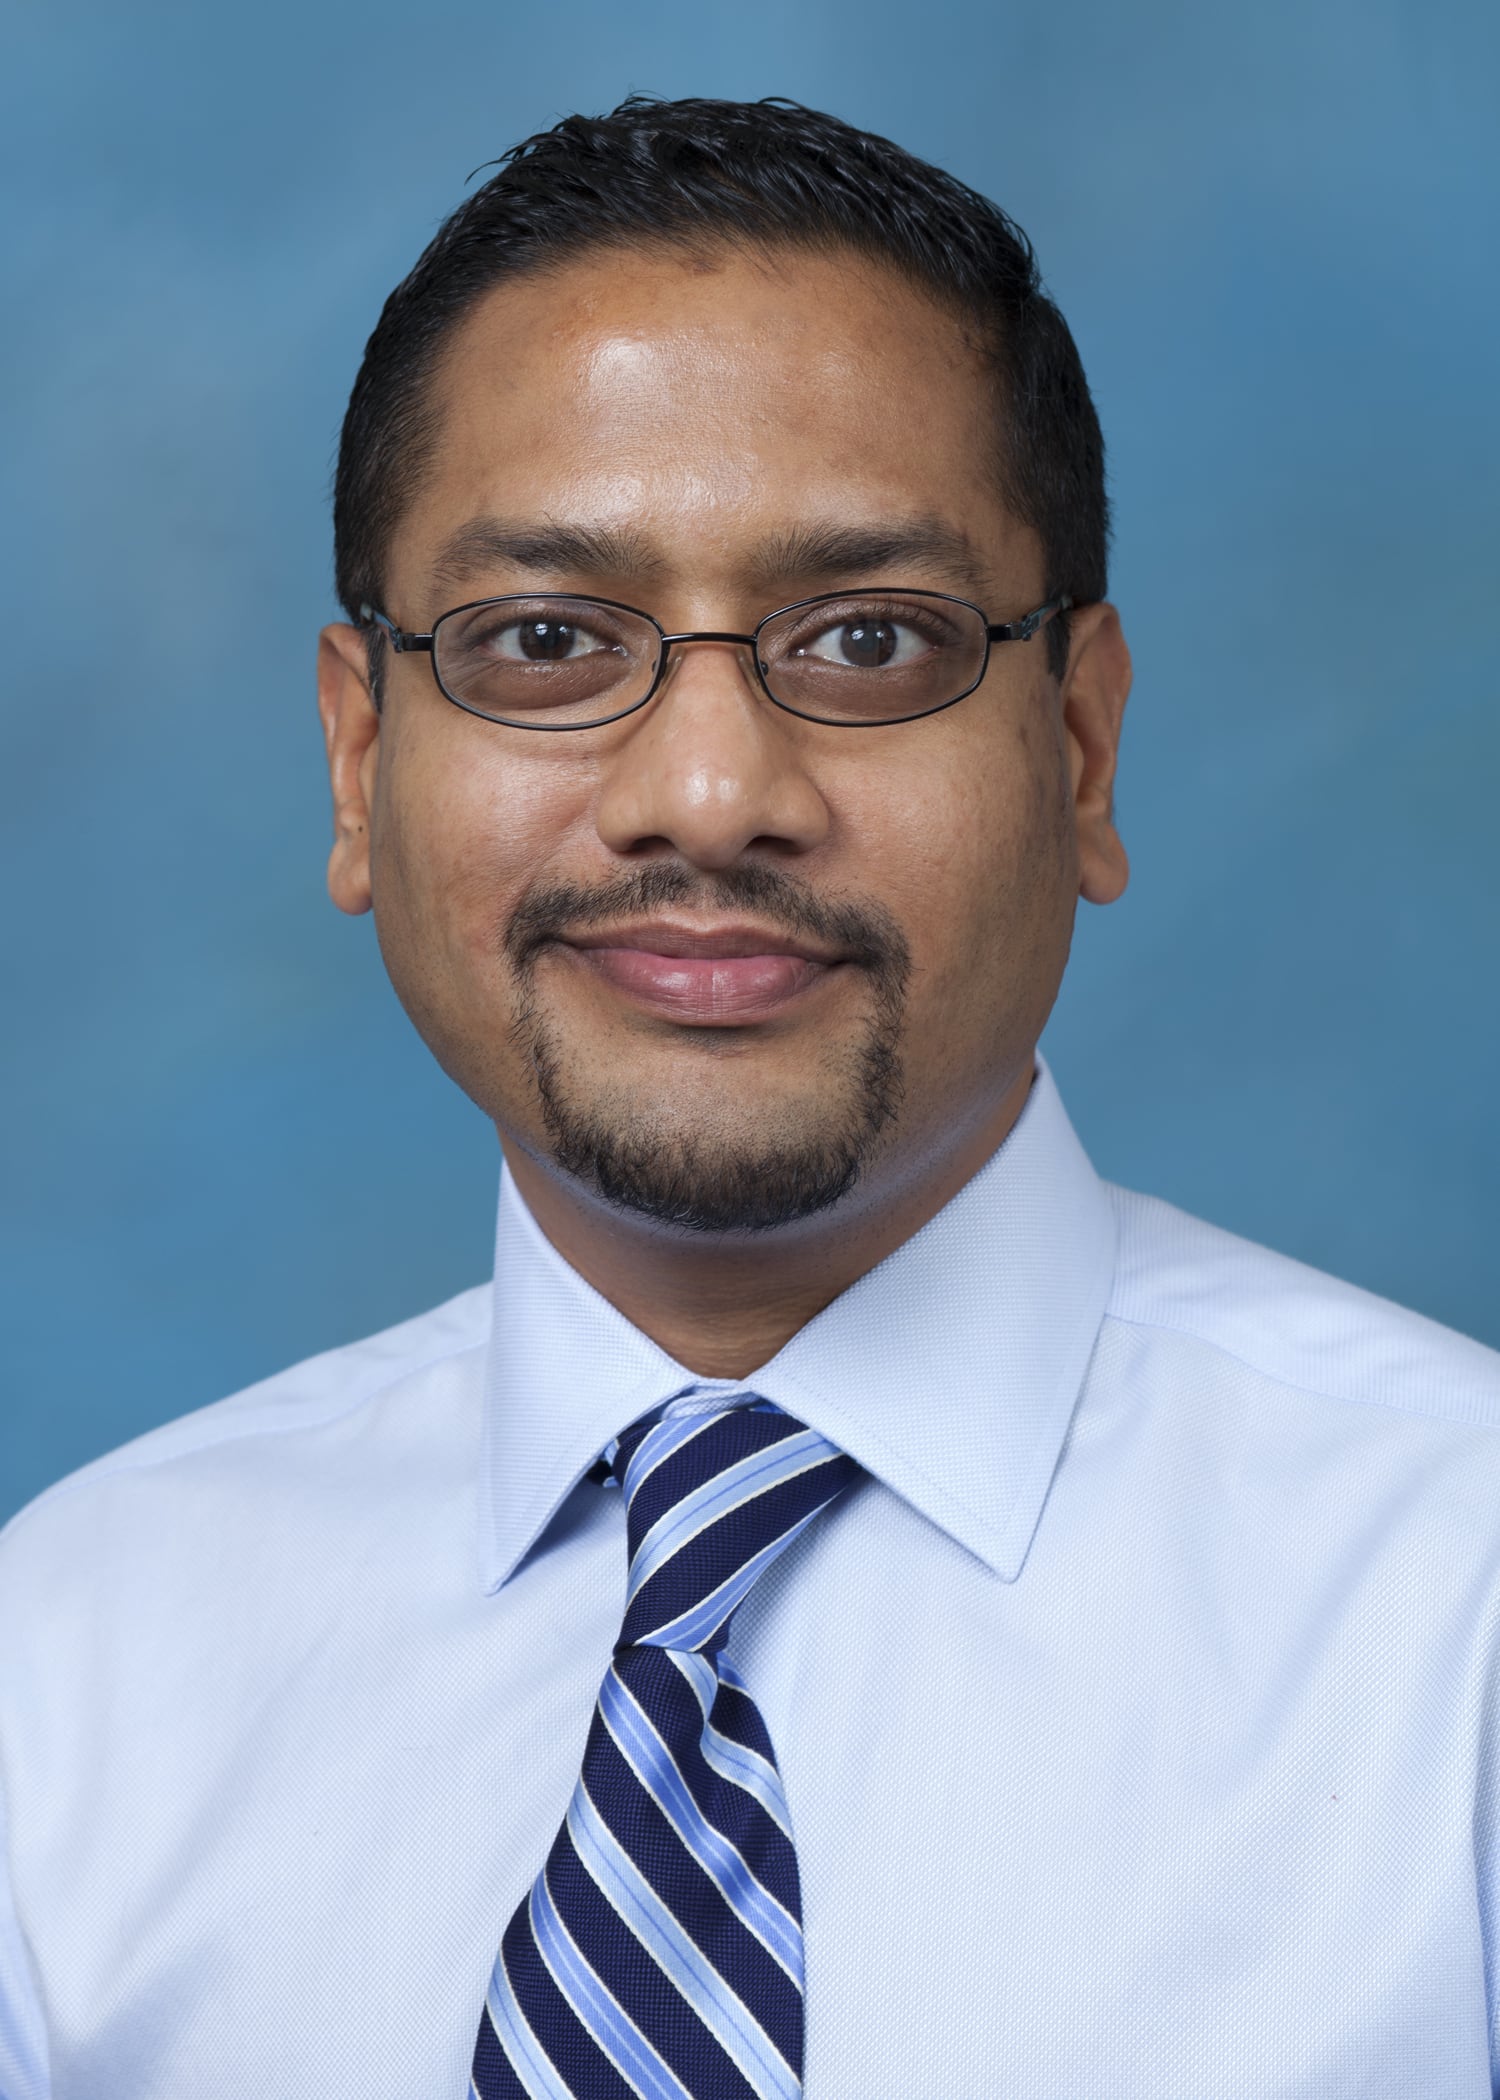 Dr. Amit Mittal